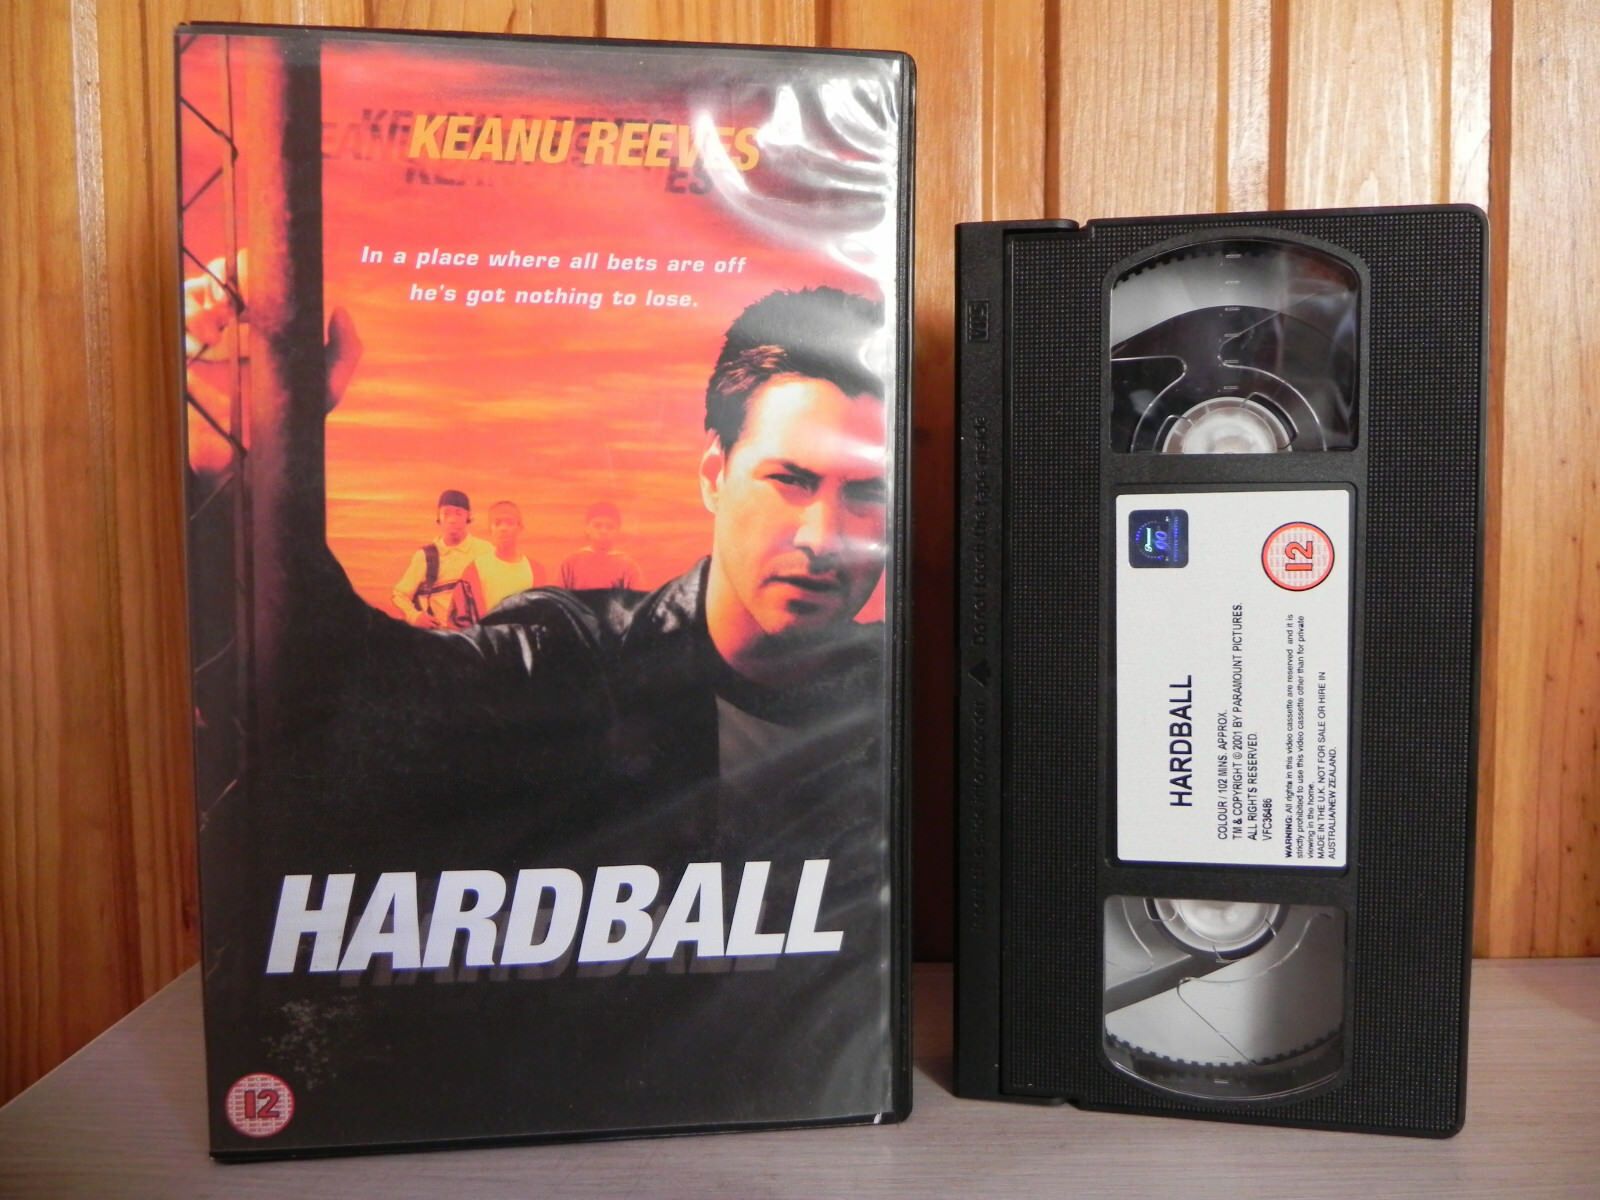 Hardball - Big-Box - Ex-Rental - A Younger Keanu Reeves - Intense Drama - VHS-